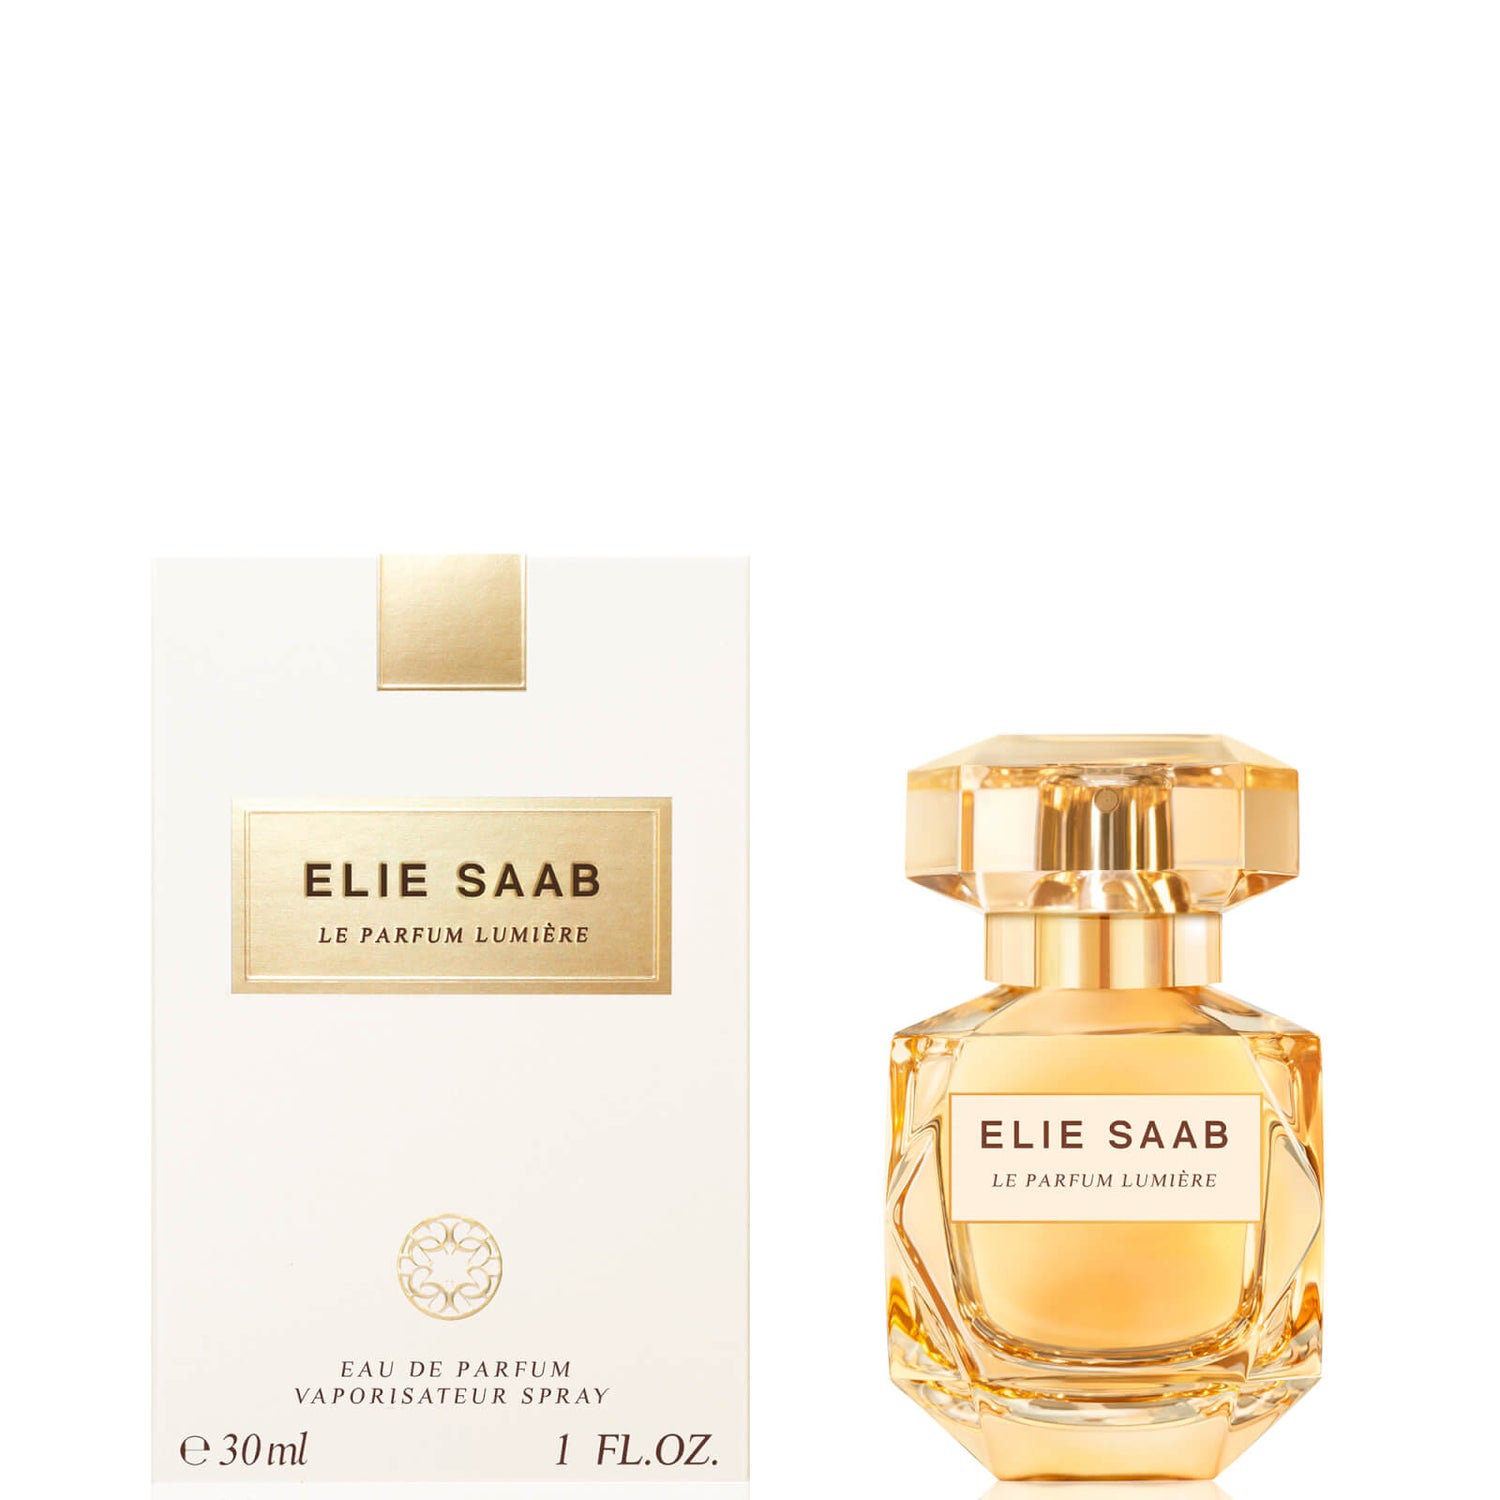 Elie Saab Le Parfum Lumiere Eau de Parfum 30ml - LOOKFANTASTIC